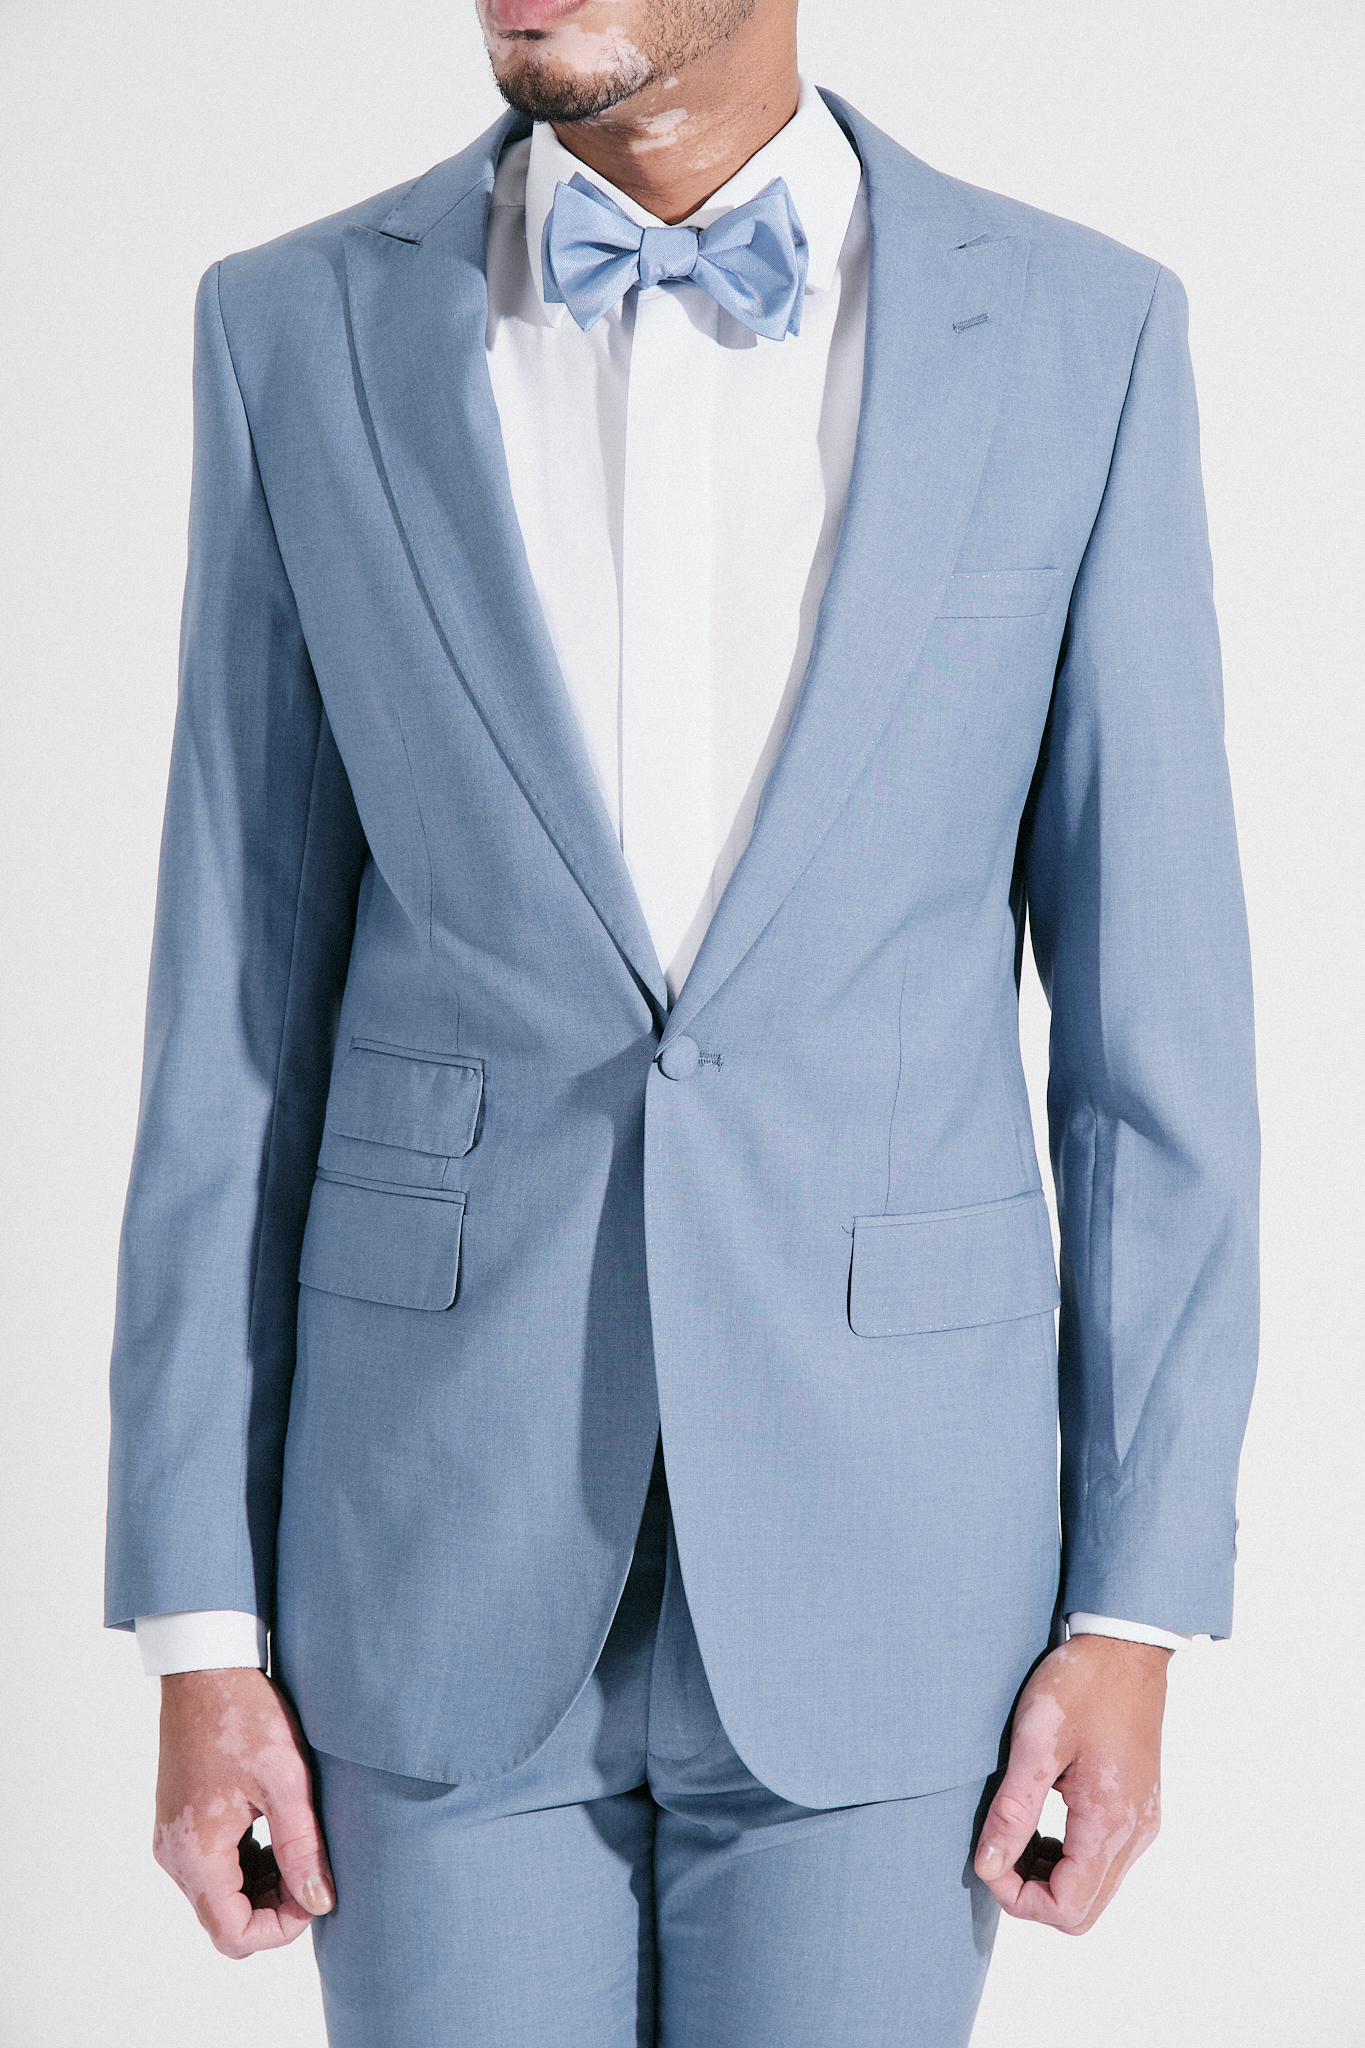 Discover 246+ ice blue suit super hot